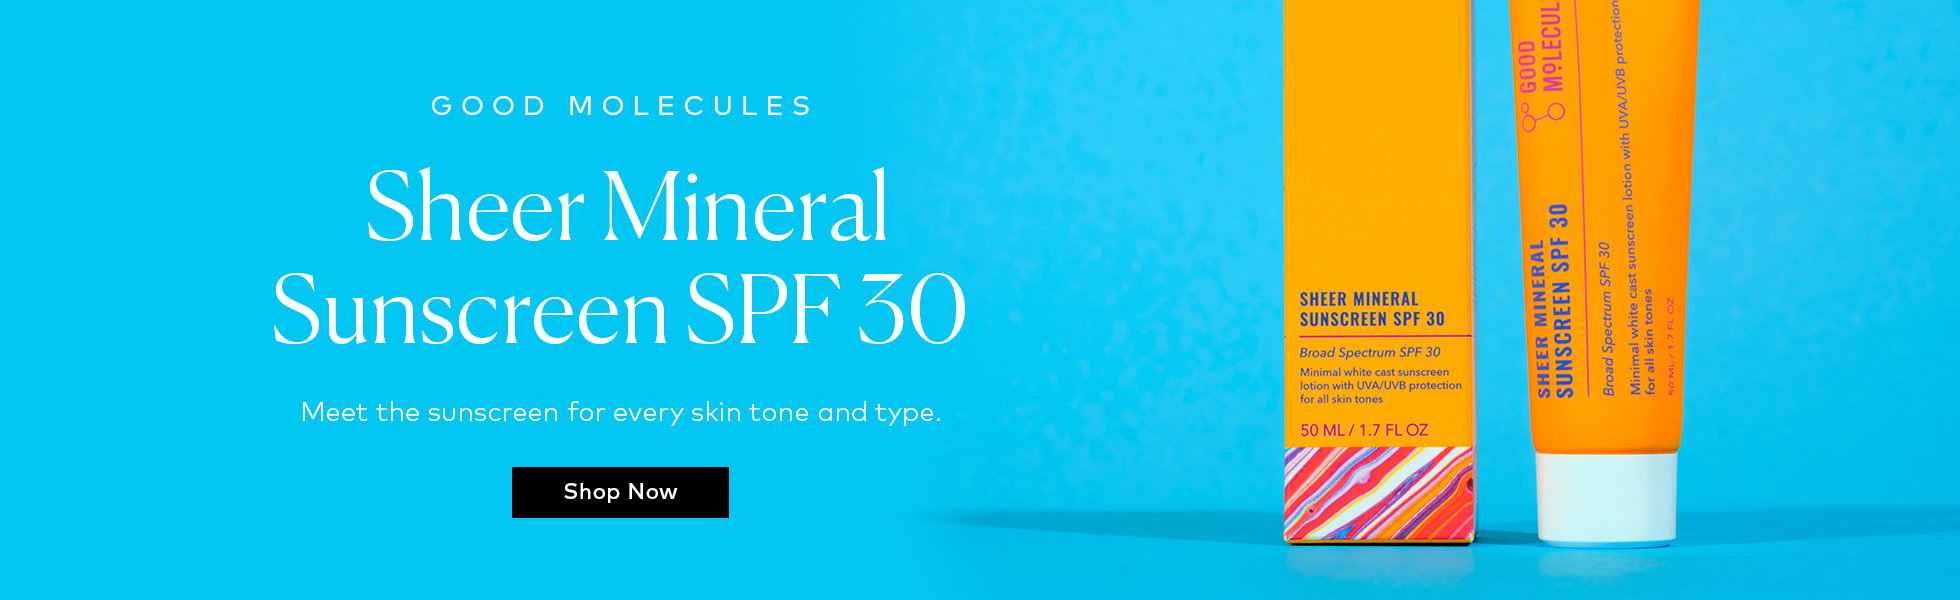 Shop the new Good Molecules Sheer Mineral Sunscreen SPF 30 on Beautylish.com